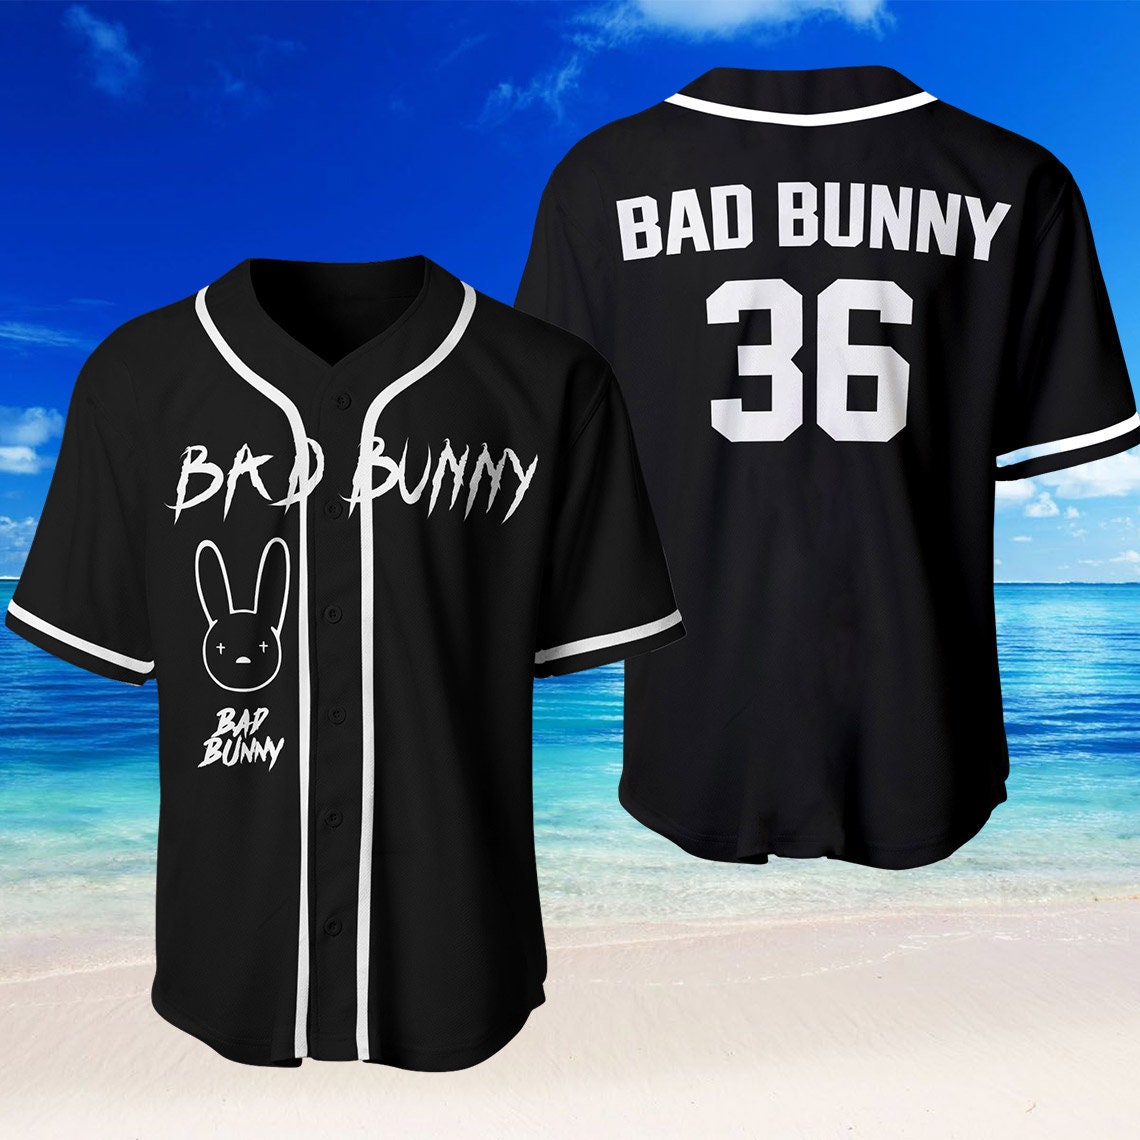 bad bunny basketball jersey